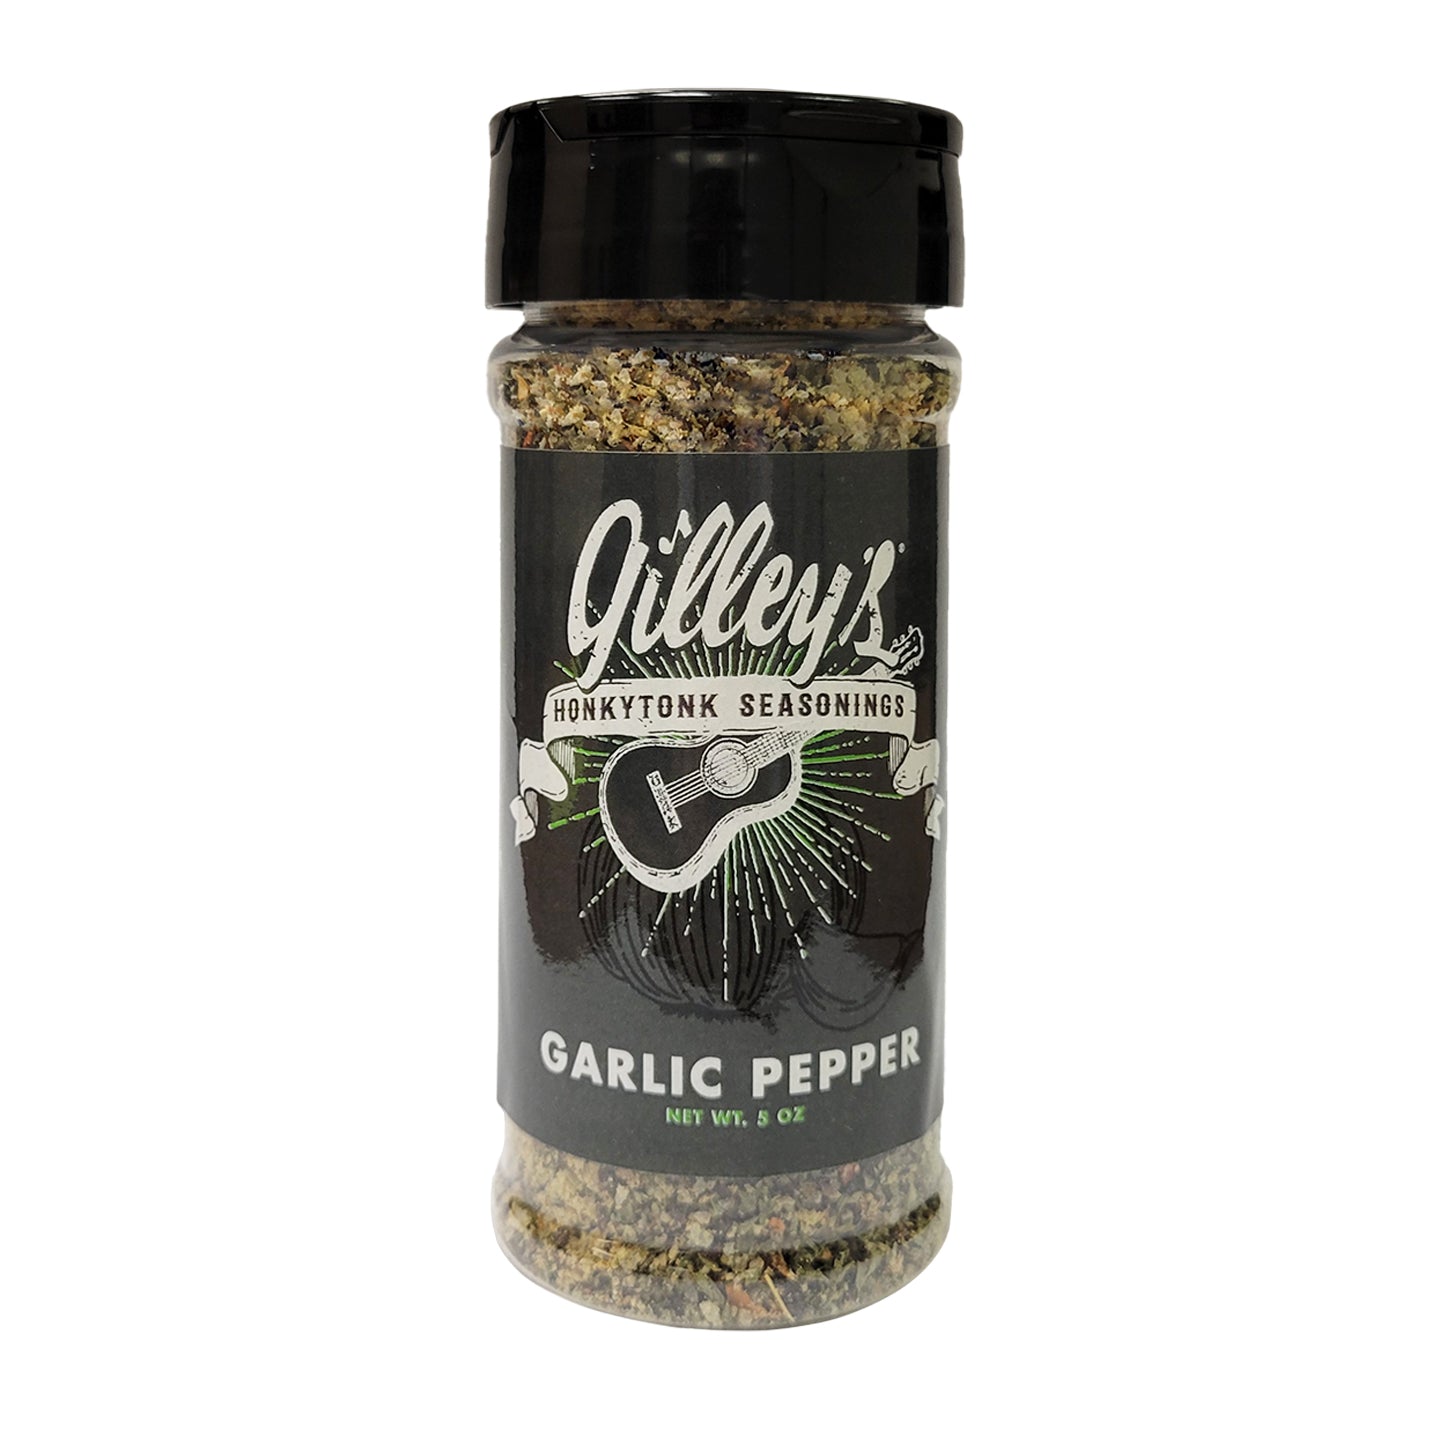 Gilley's Garlic Pepper Seasoning